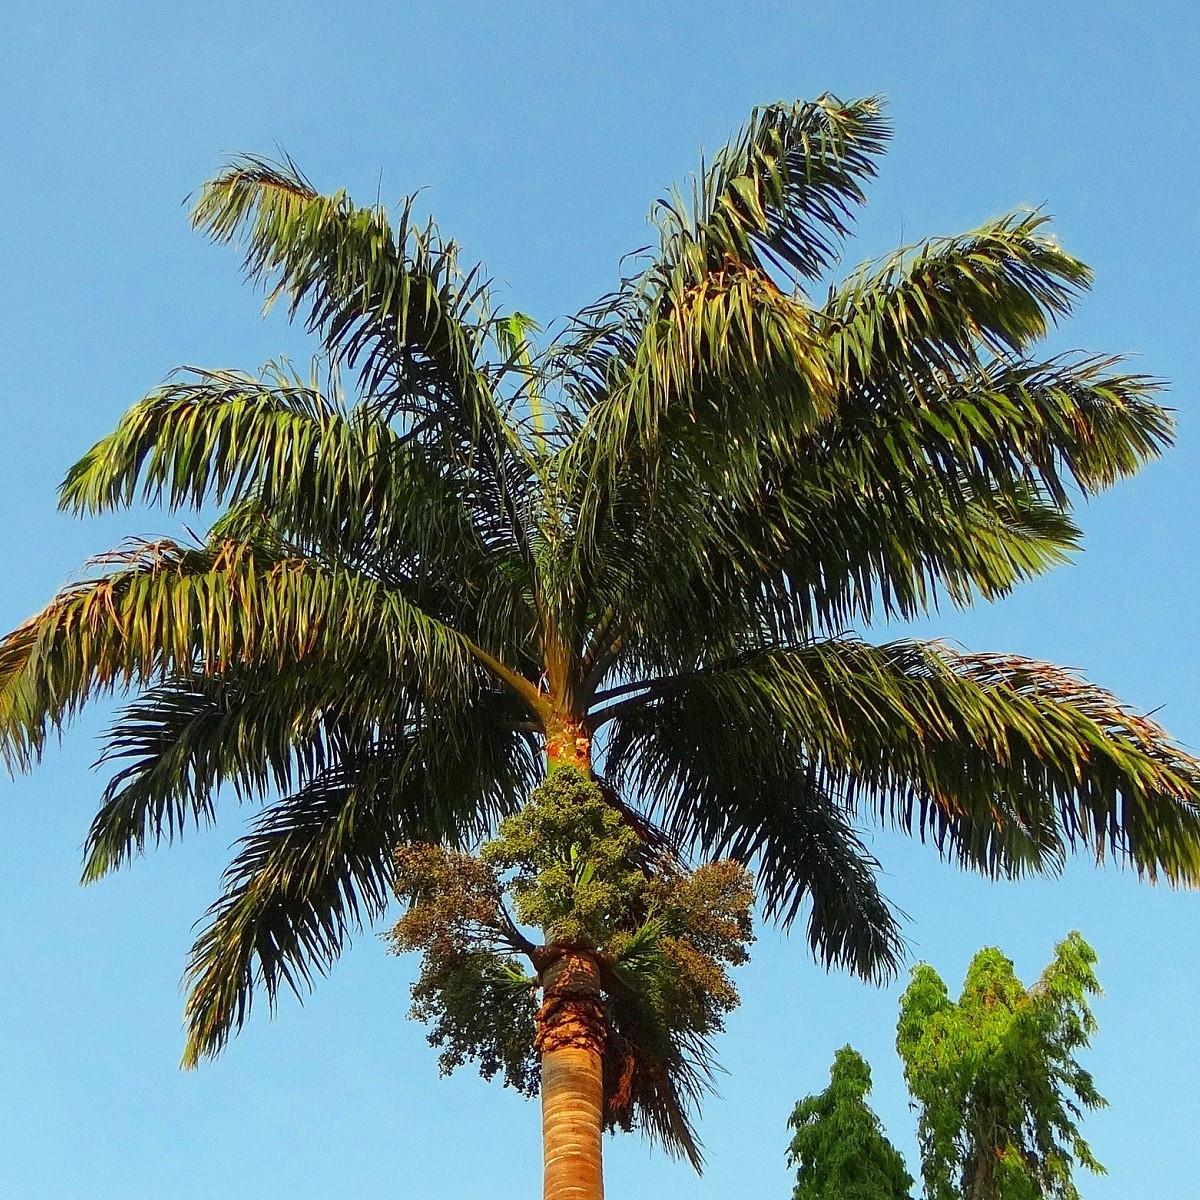 Palma královská kubánská - Roystonea regia - semena - 3 ks